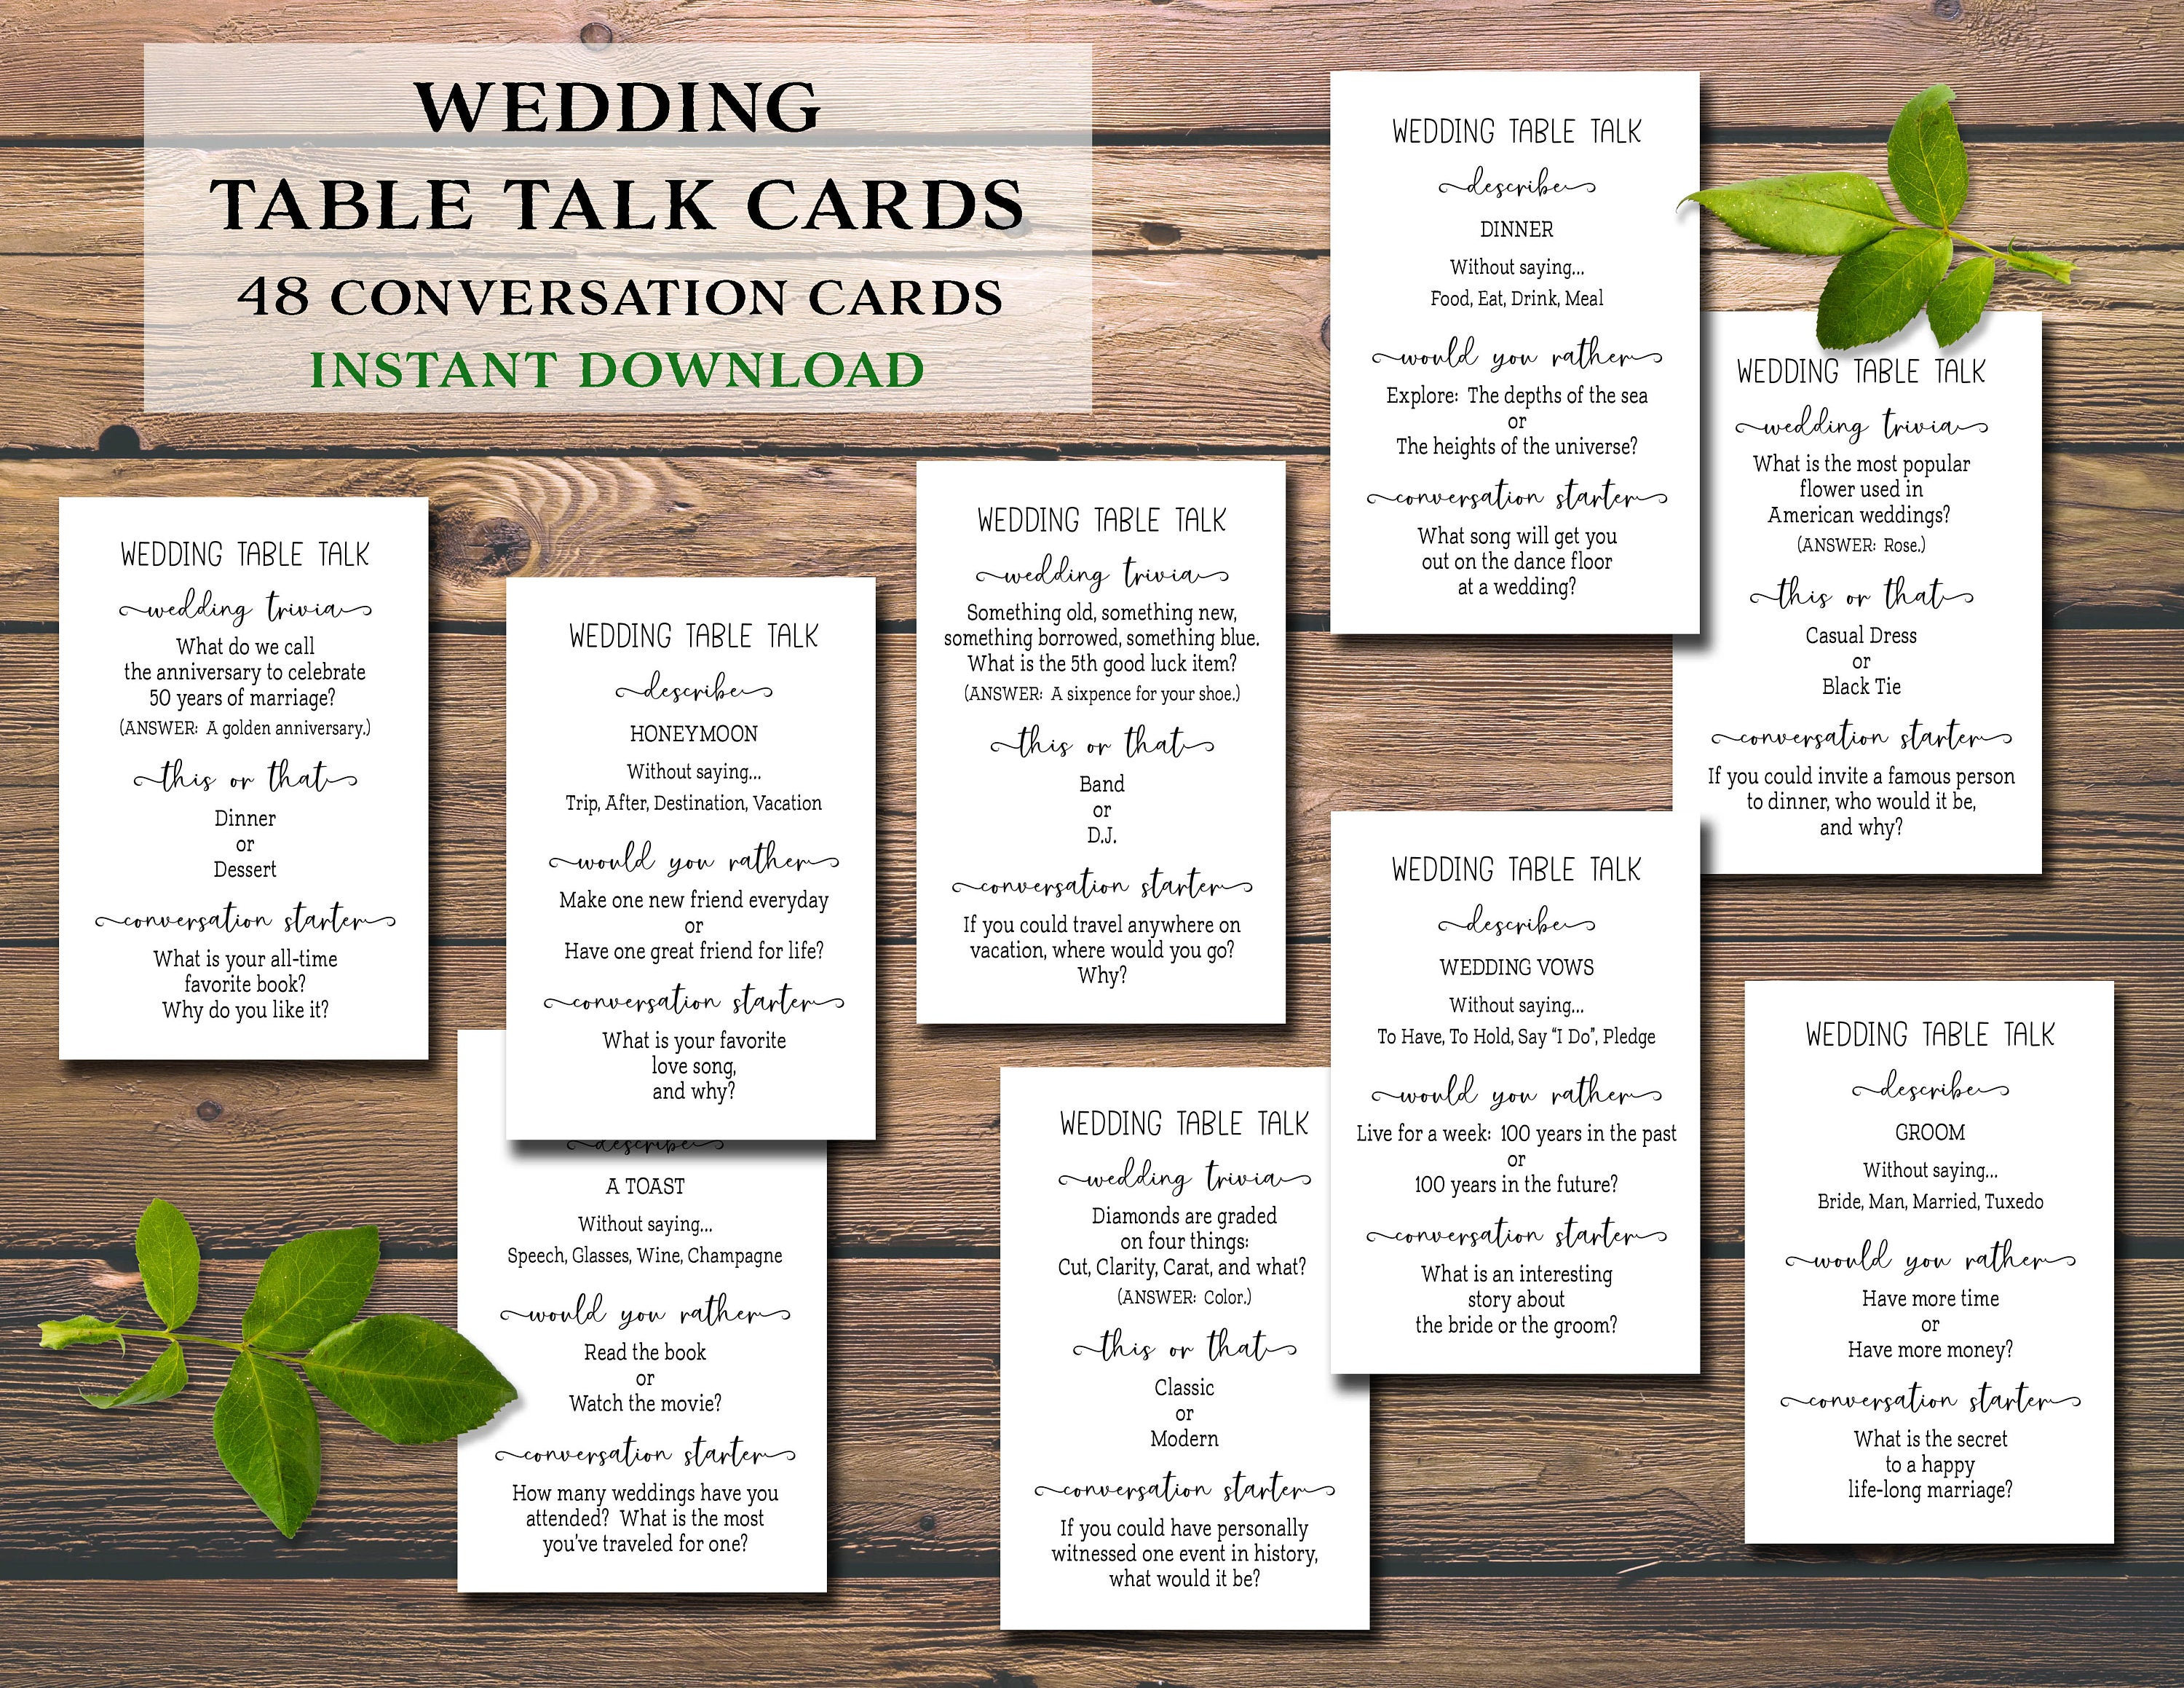 Negotiating Table. 1 Minute talk Cards. Card talk